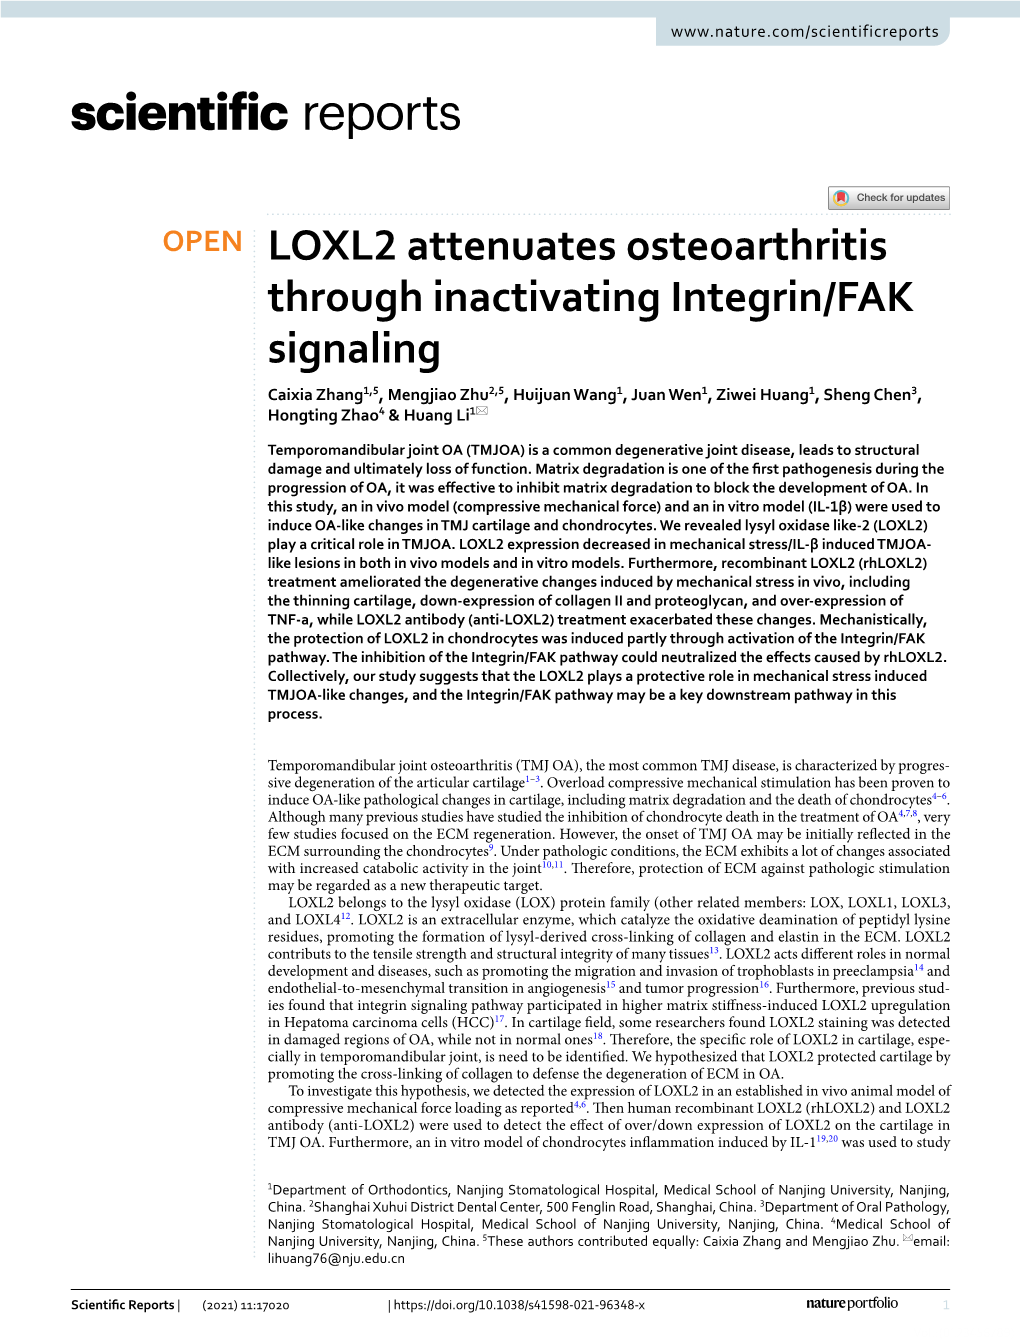 LOXL2 Attenuates Osteoarthritis Through Inactivating Integrin/FAK